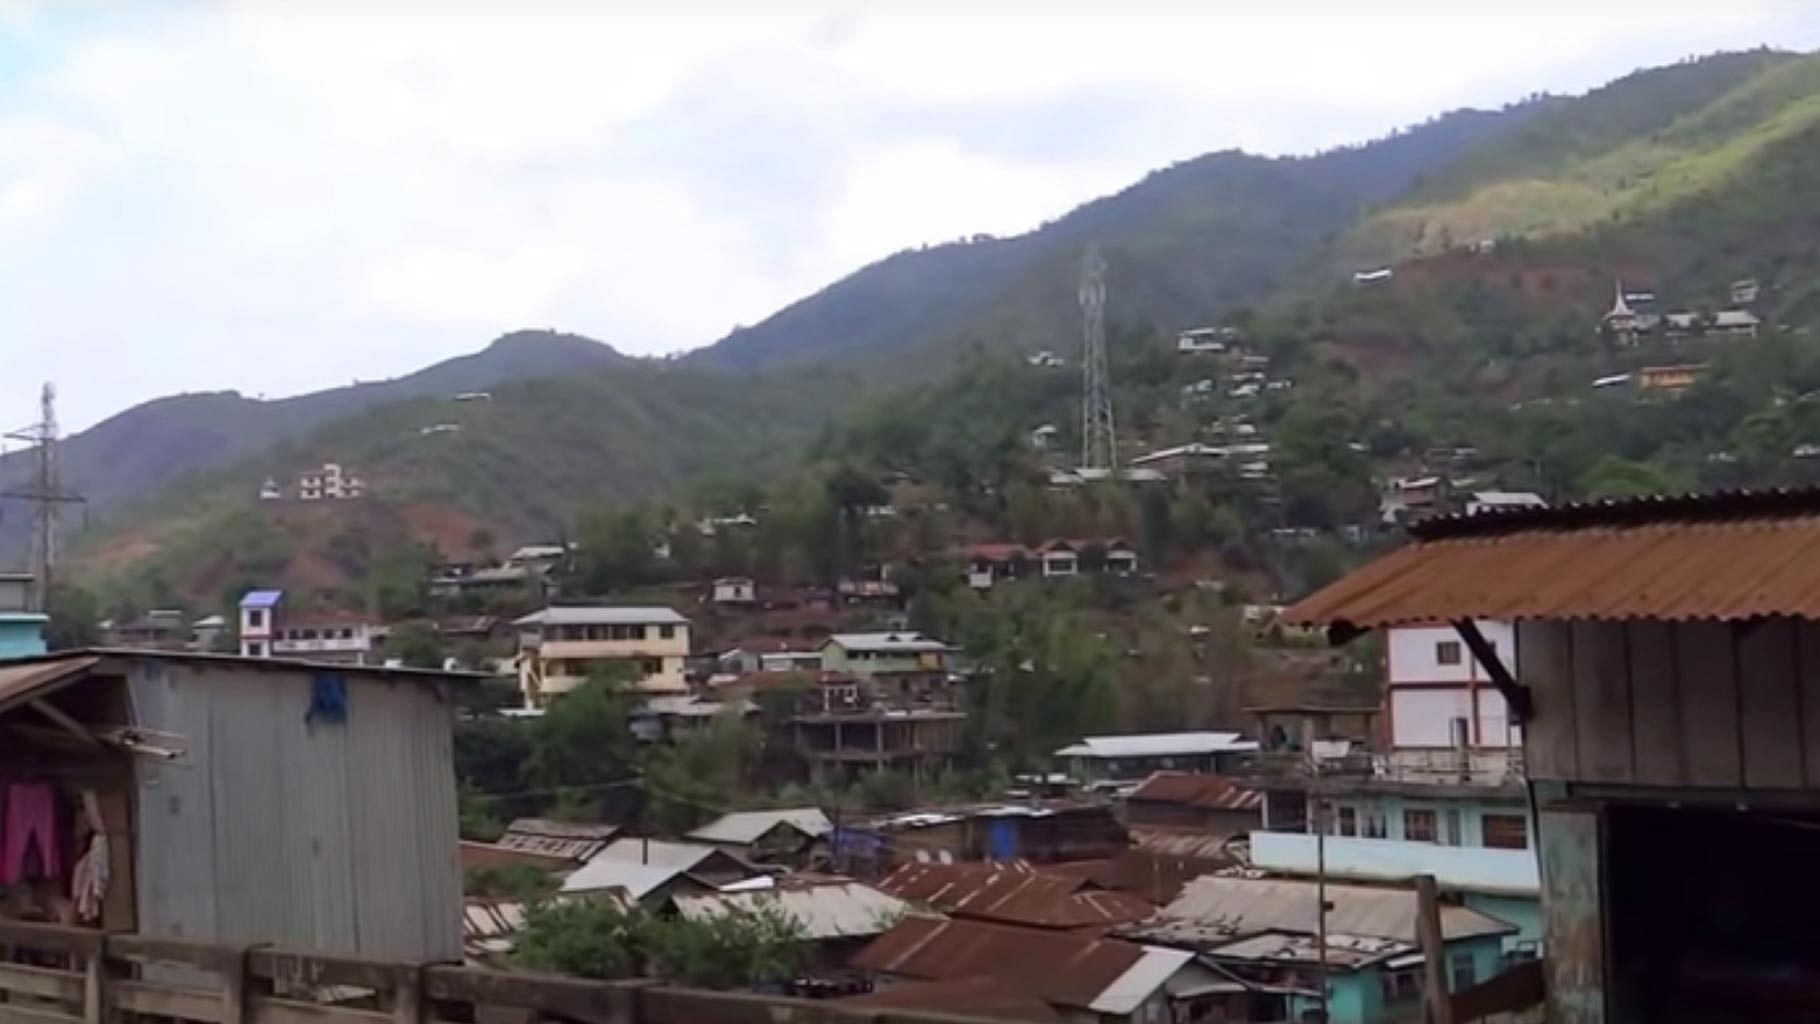 Nagaland’s capital Kohima&nbsp;(Photo: <a href="https://www.youtube.com/watch?v=GmH5Y2yqgjI">Youtube.com</a>)